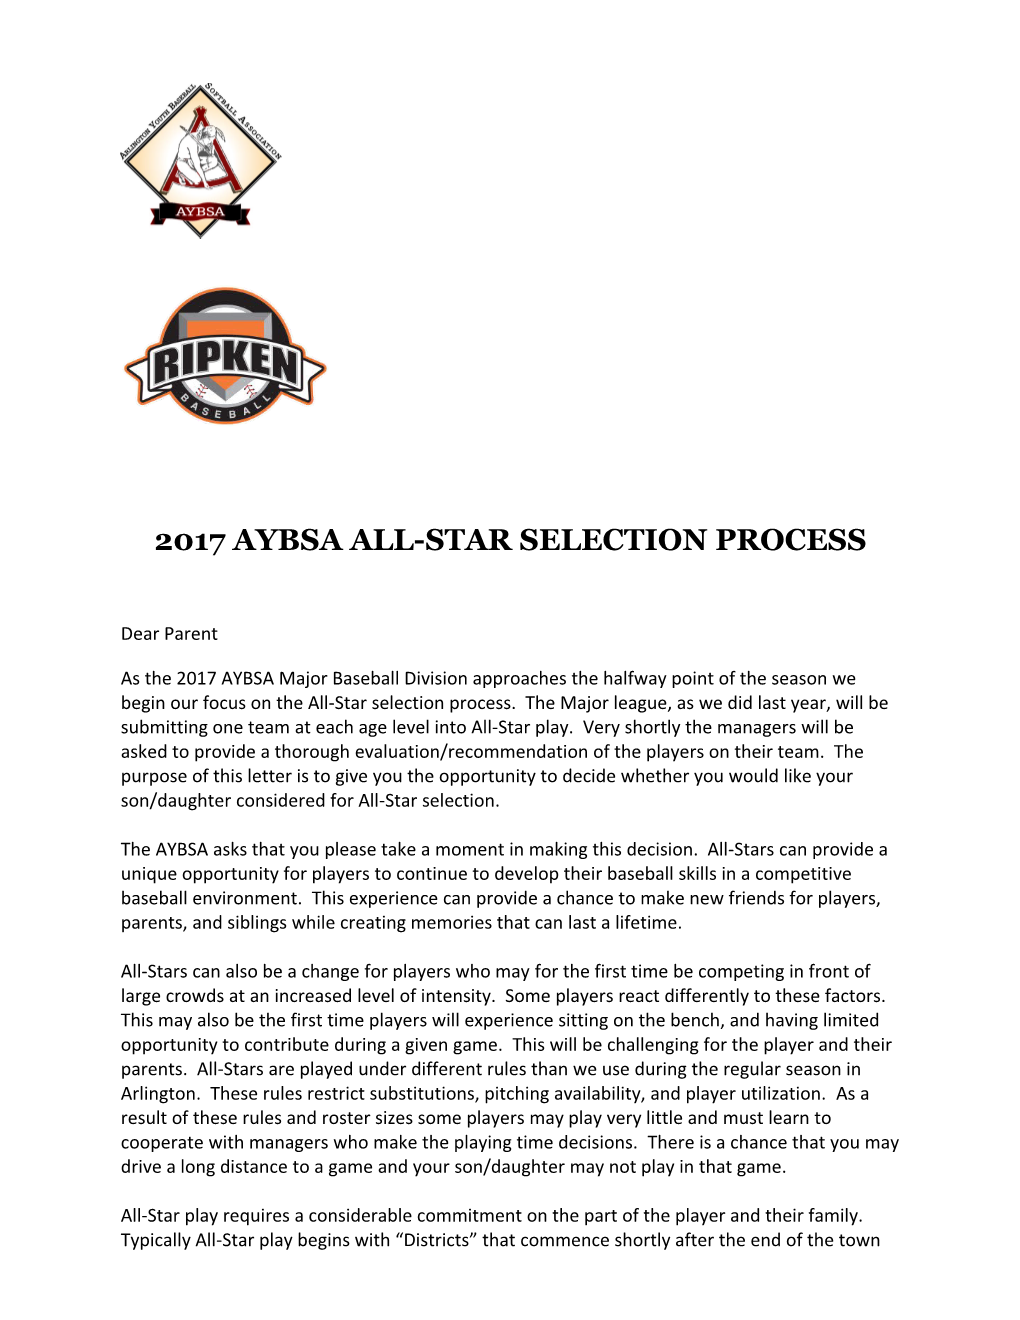 2017 Aybsa All-Star Selection Process